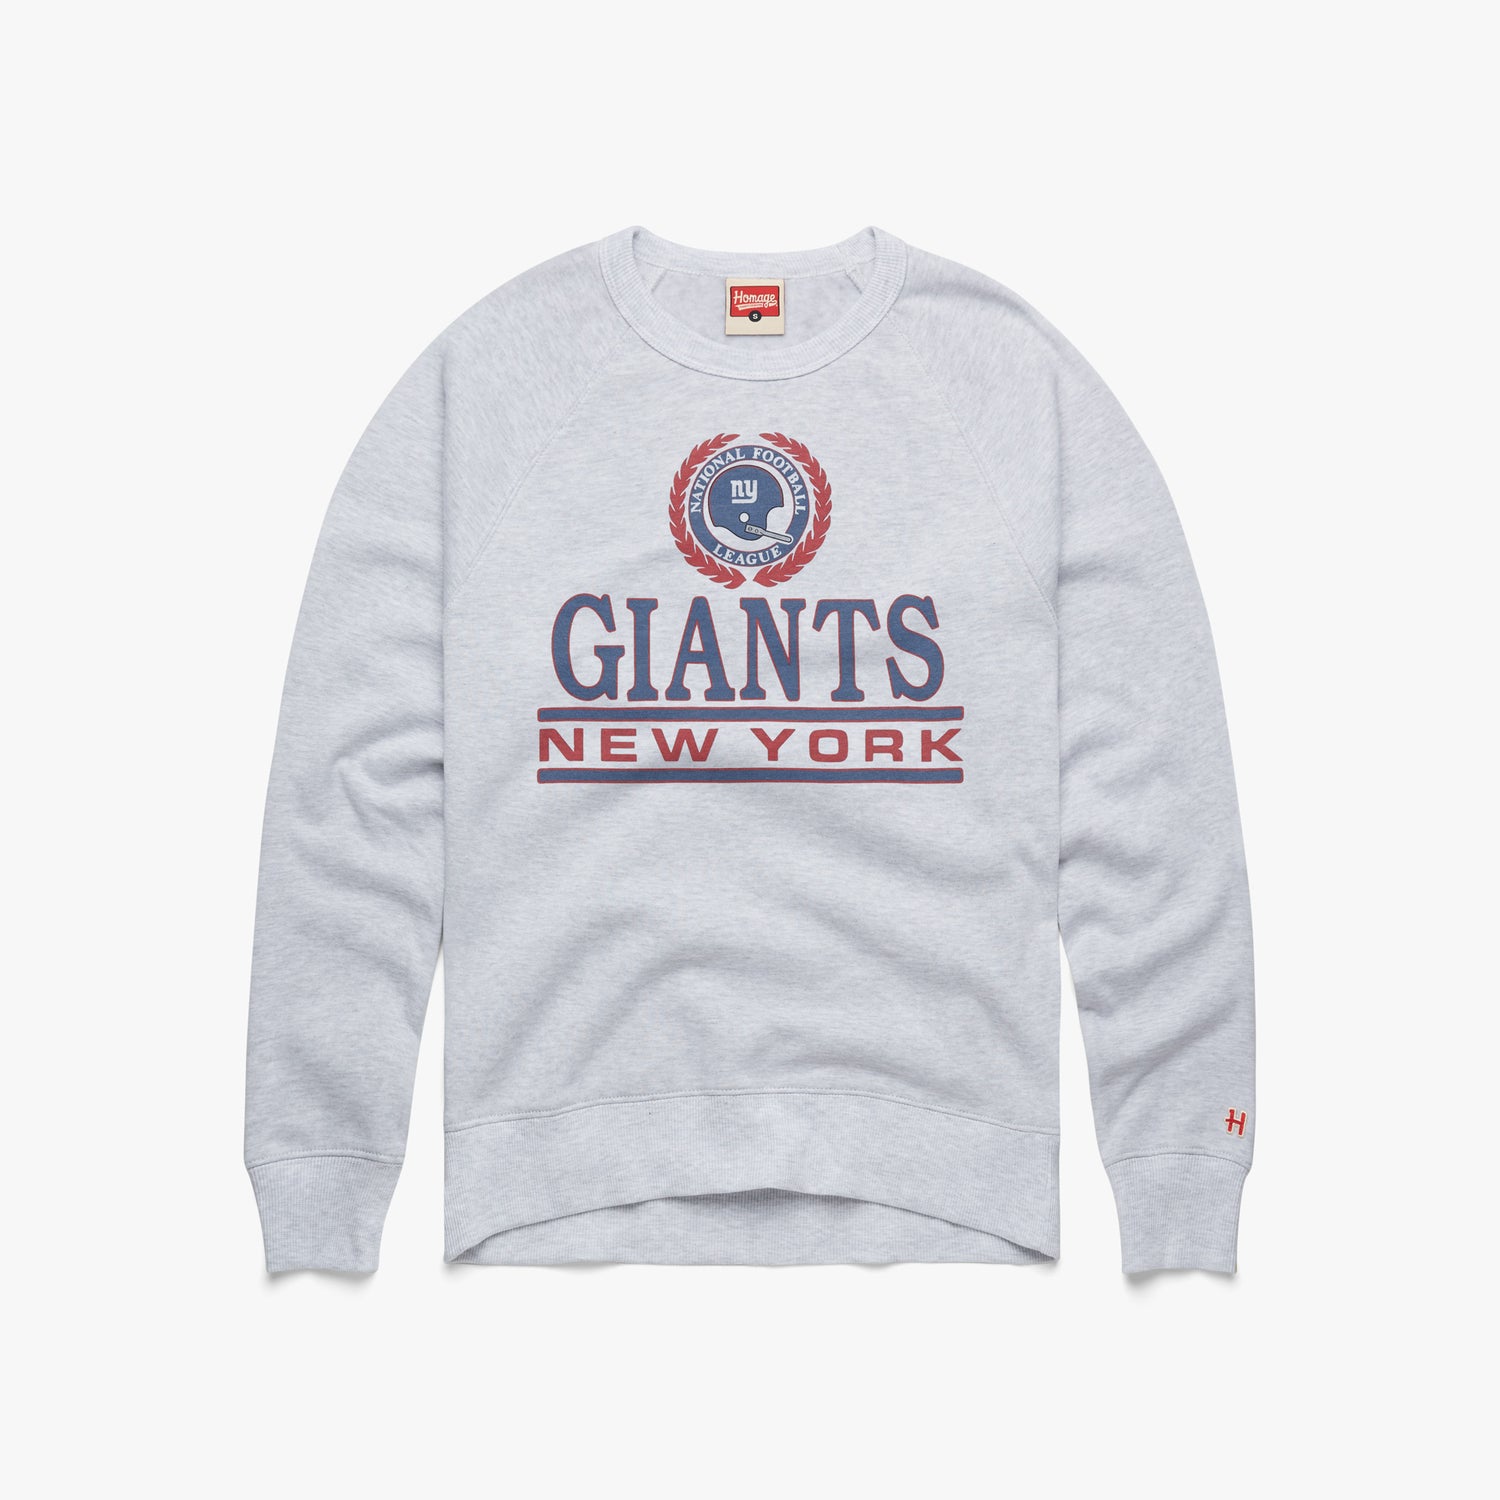 Vintage America USA Legends Sweatshirt Crewneck Size XL Big 